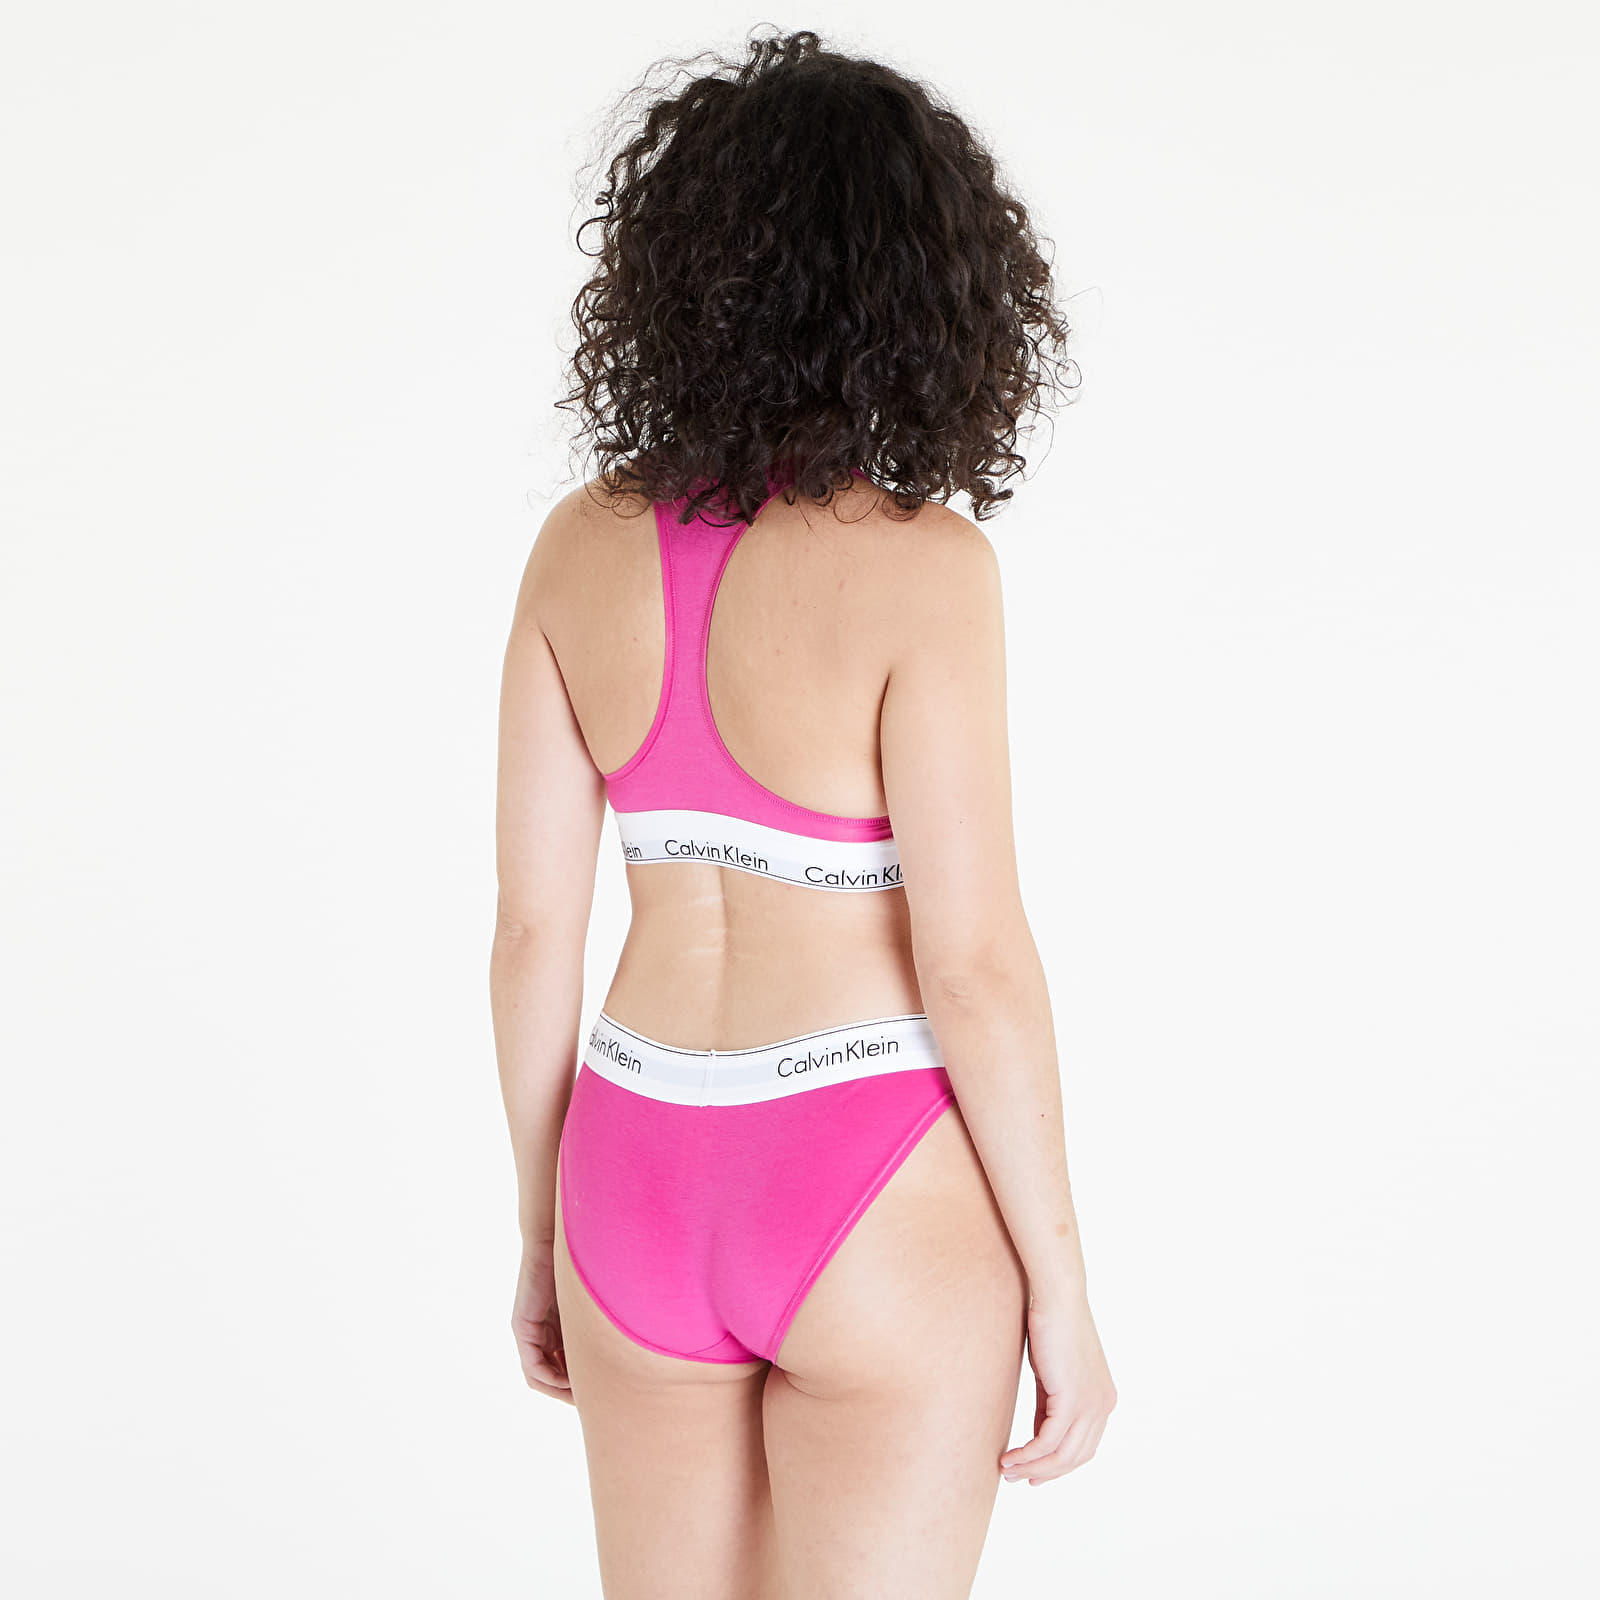 Buy Calvin Klein Women's Carousel Unlined Bralette Soft Pink Online